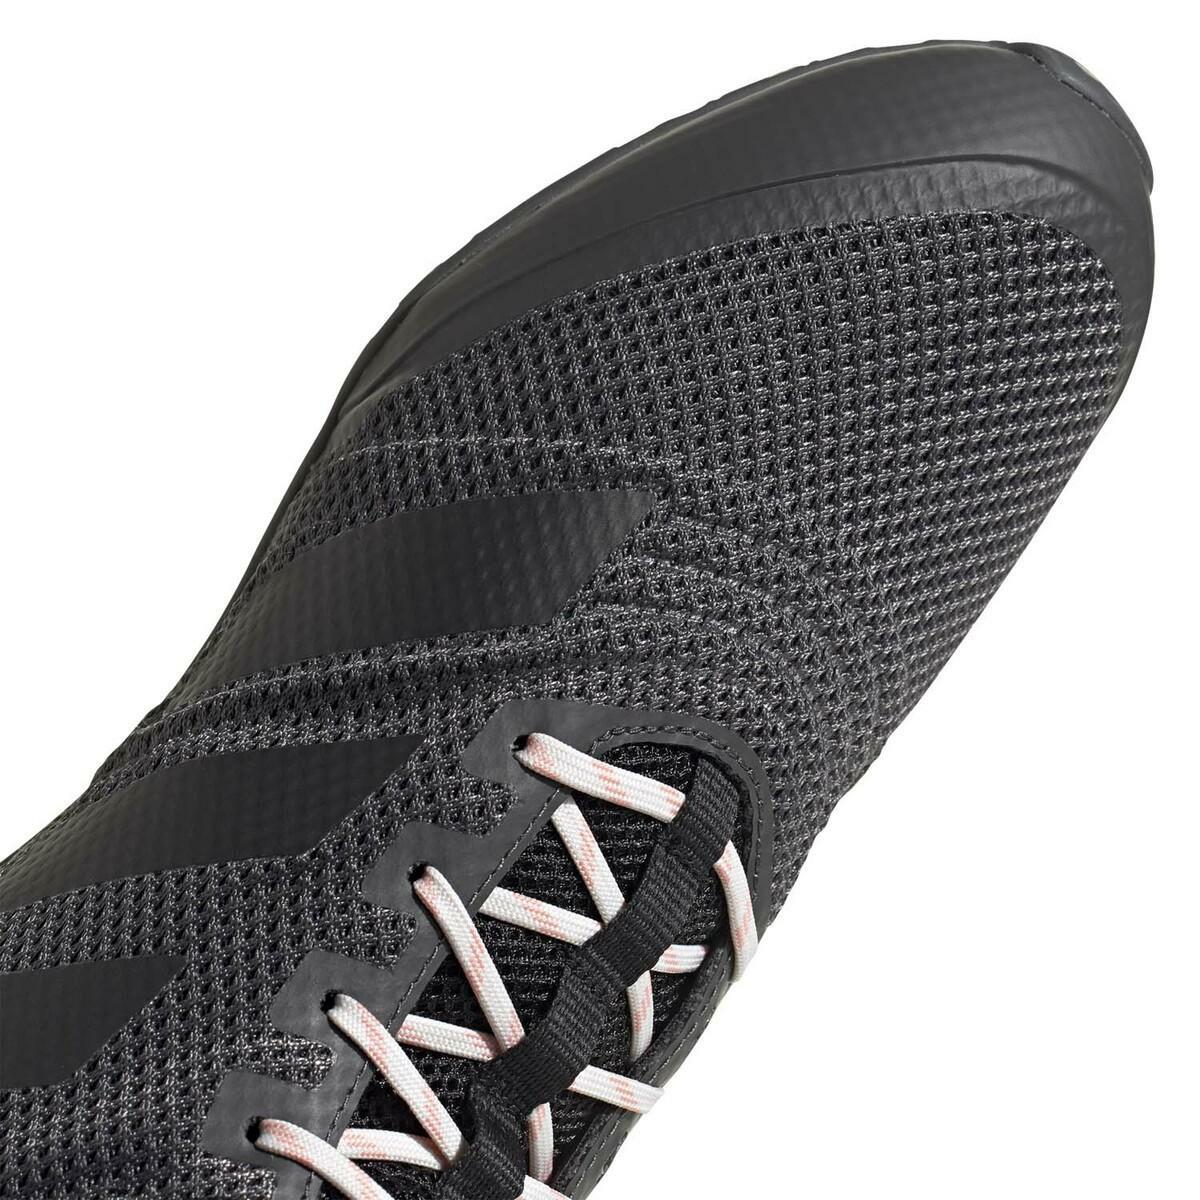 Adidas Speedex 18 Boxing Boots Black/Red FW0385